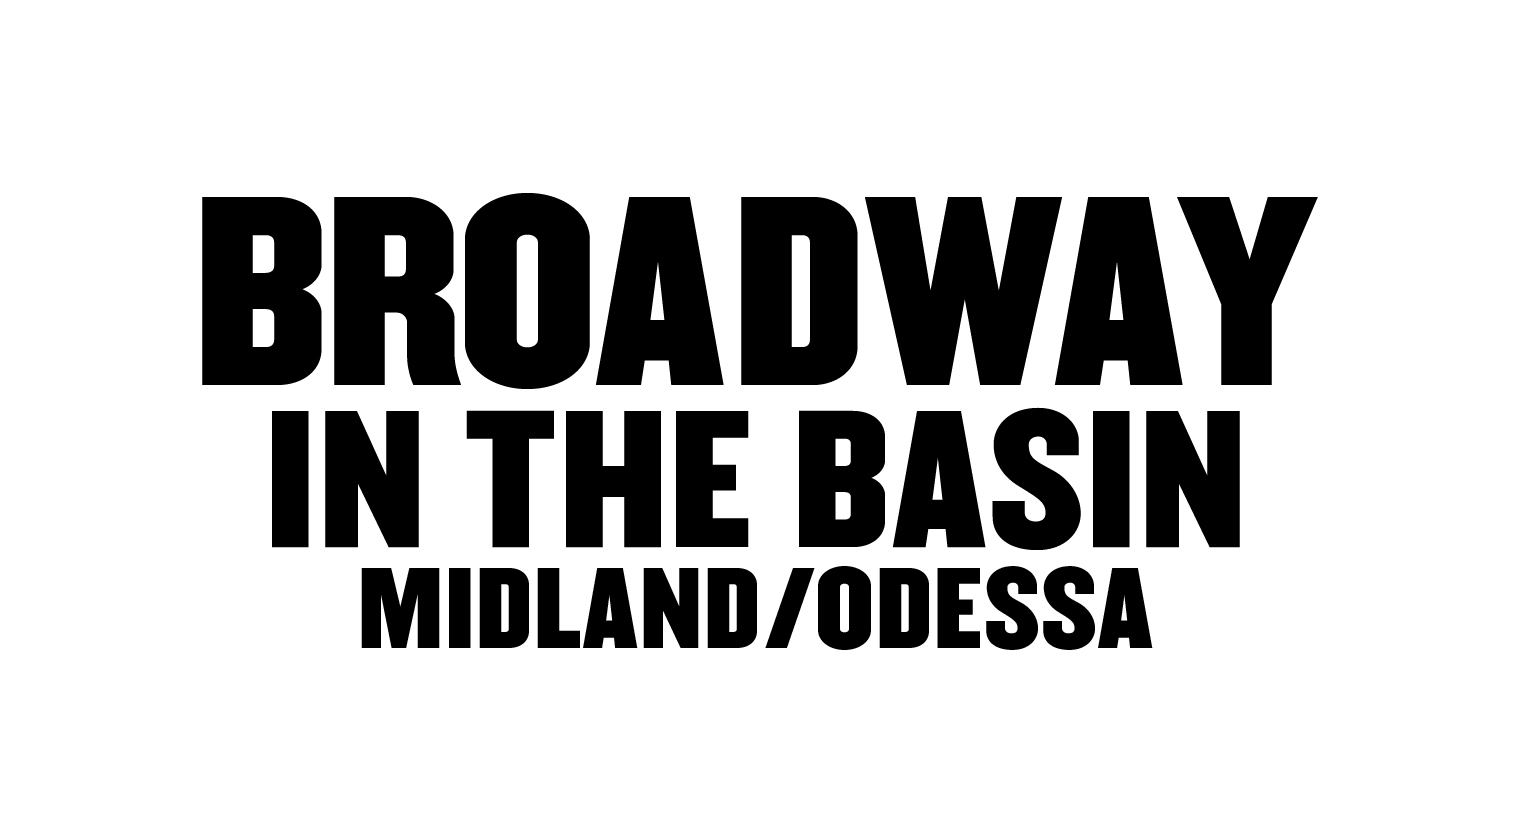 Broadway at the Basin - Midland/Odessa